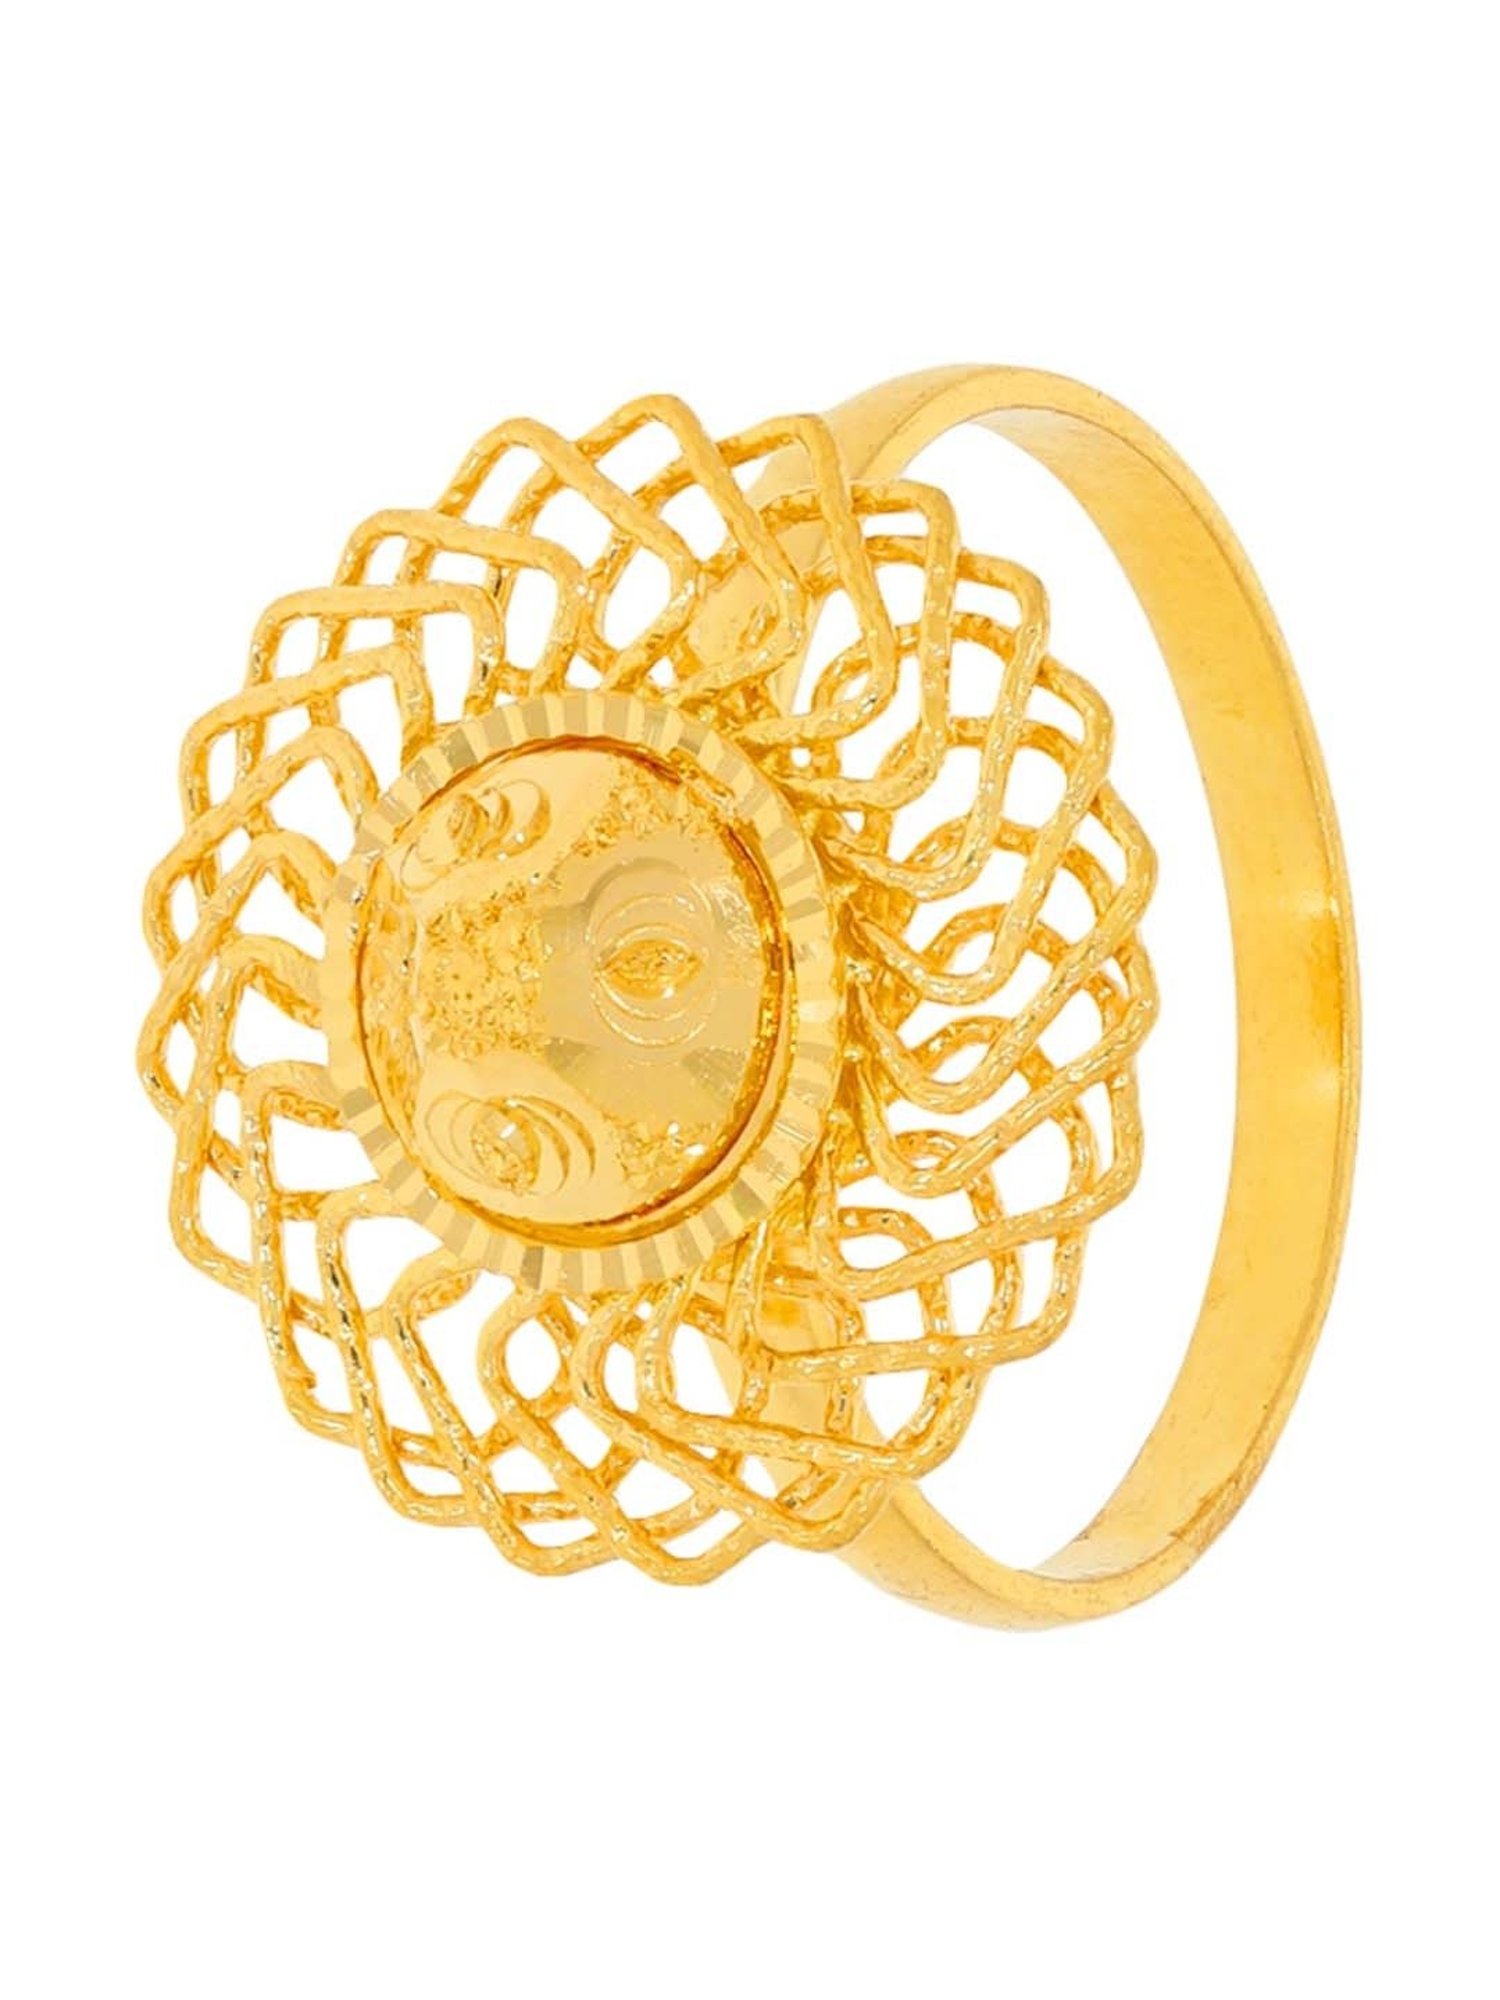 Gold Ring - WHPS42047 | Waman Hari Pethe Sons